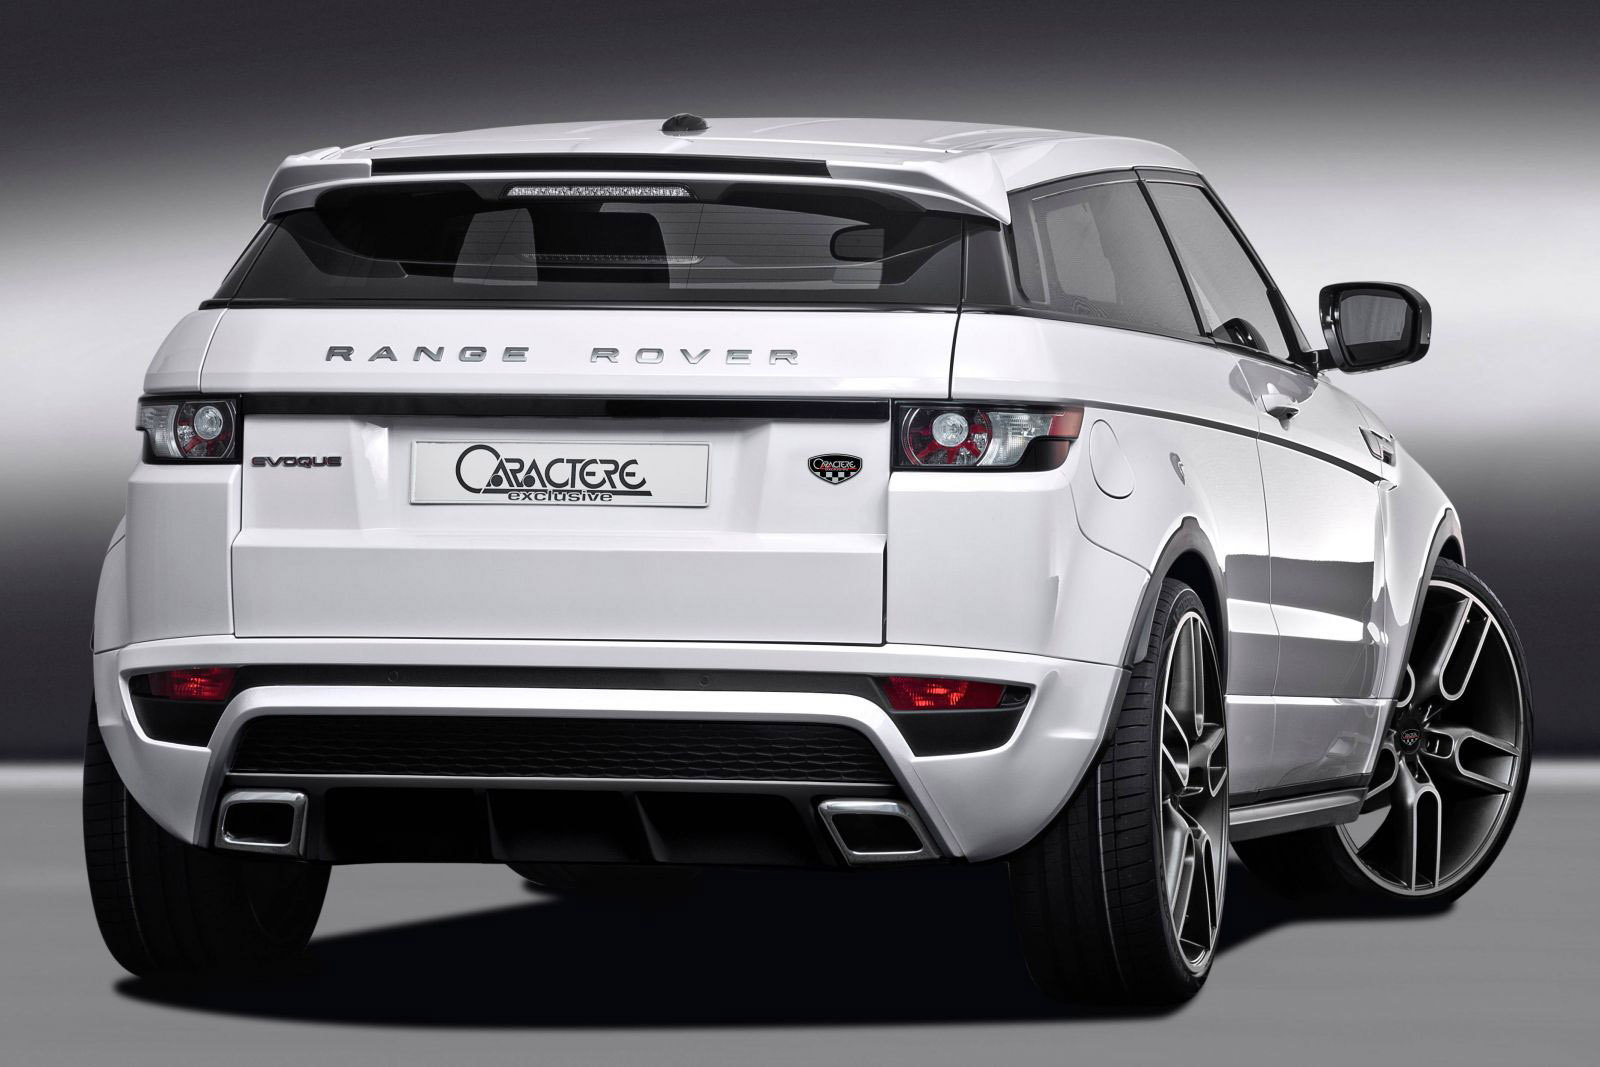 Caractere Range Rover Evoque